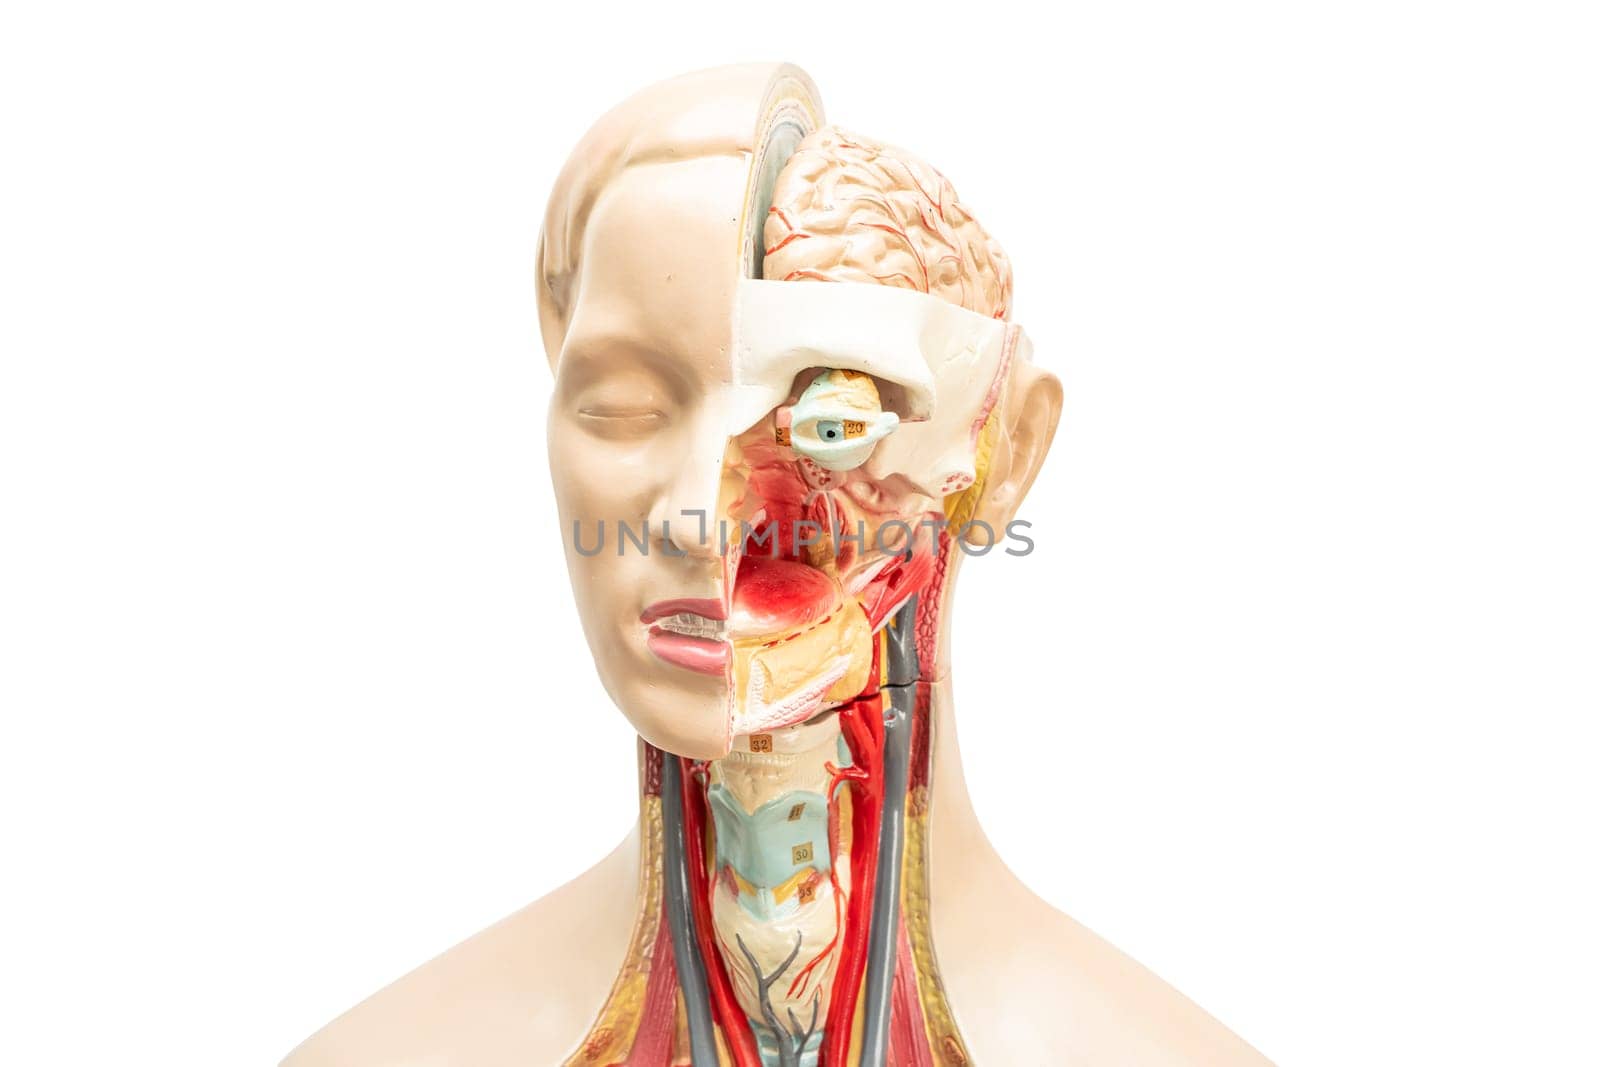 Human brain model of head anatomy for medical training course, teaching medicine education. by pamai